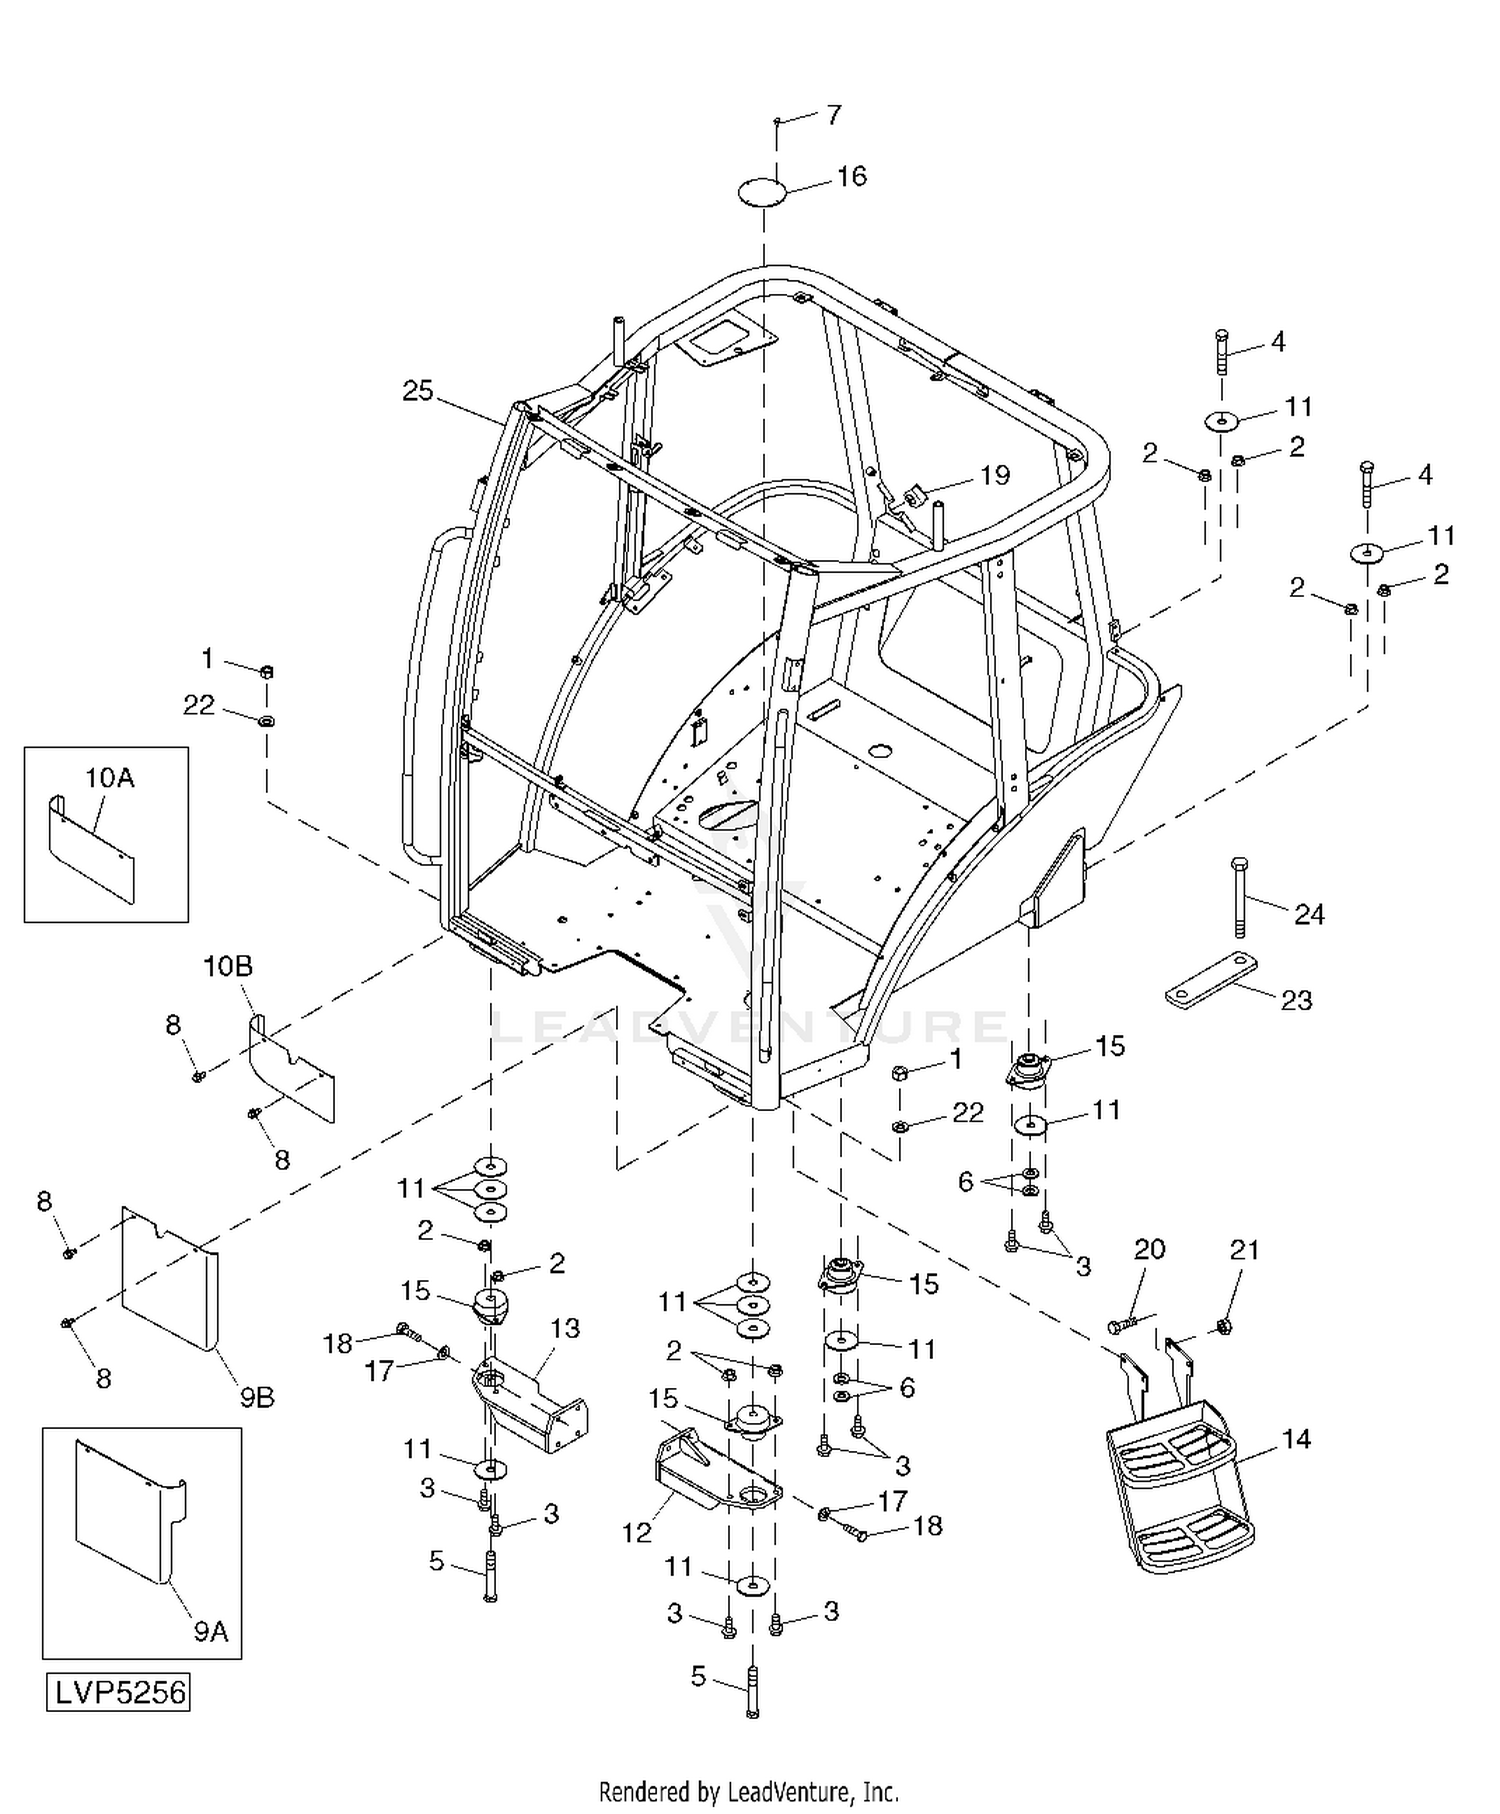 John Deere Parts Catalog - PC9425